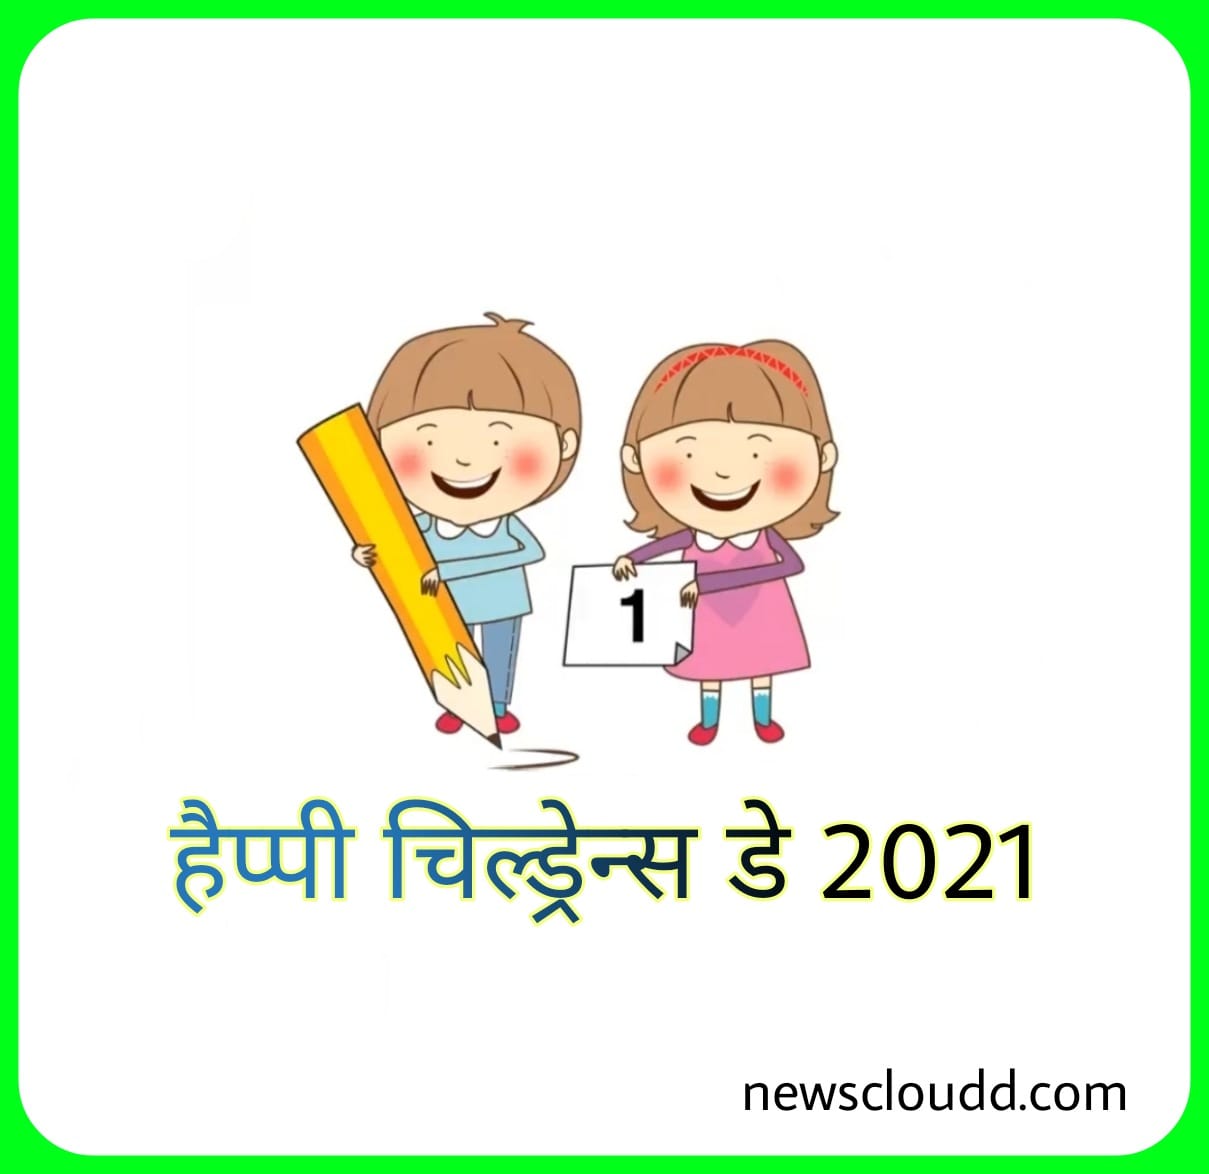 Happy Childrens Day 2021